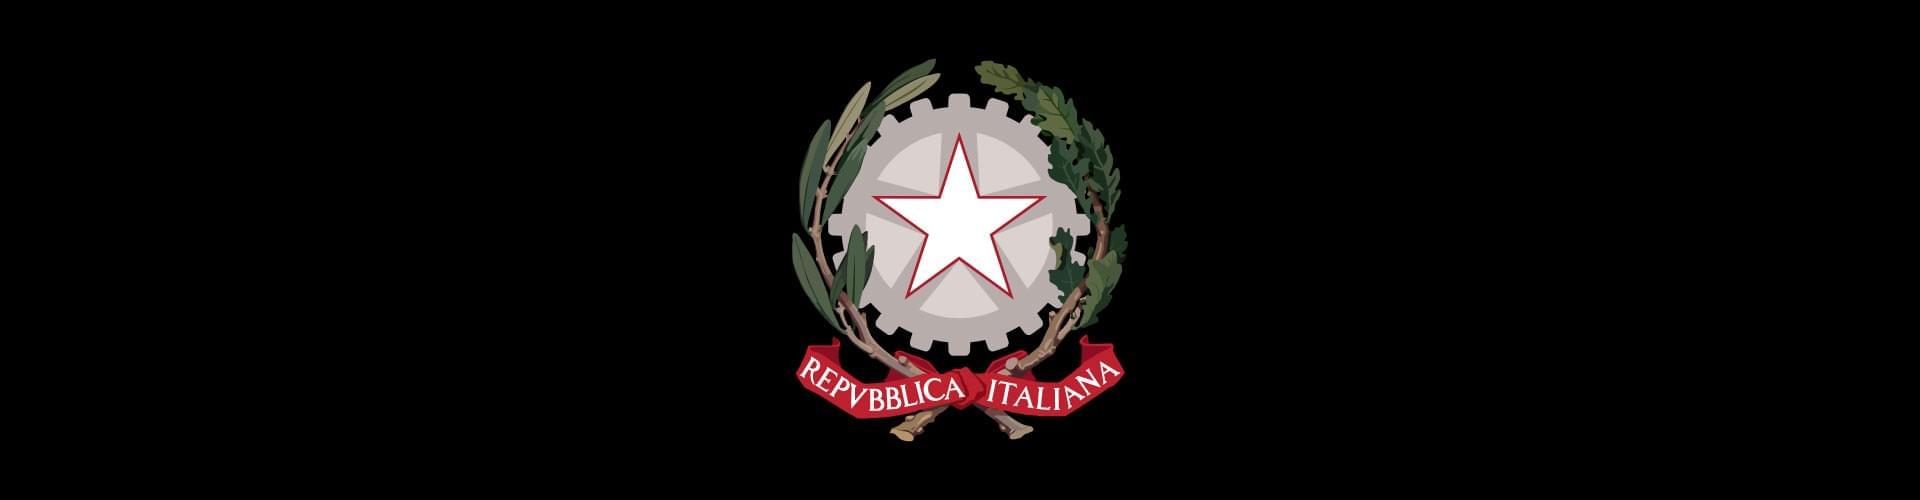 Second republic Italy